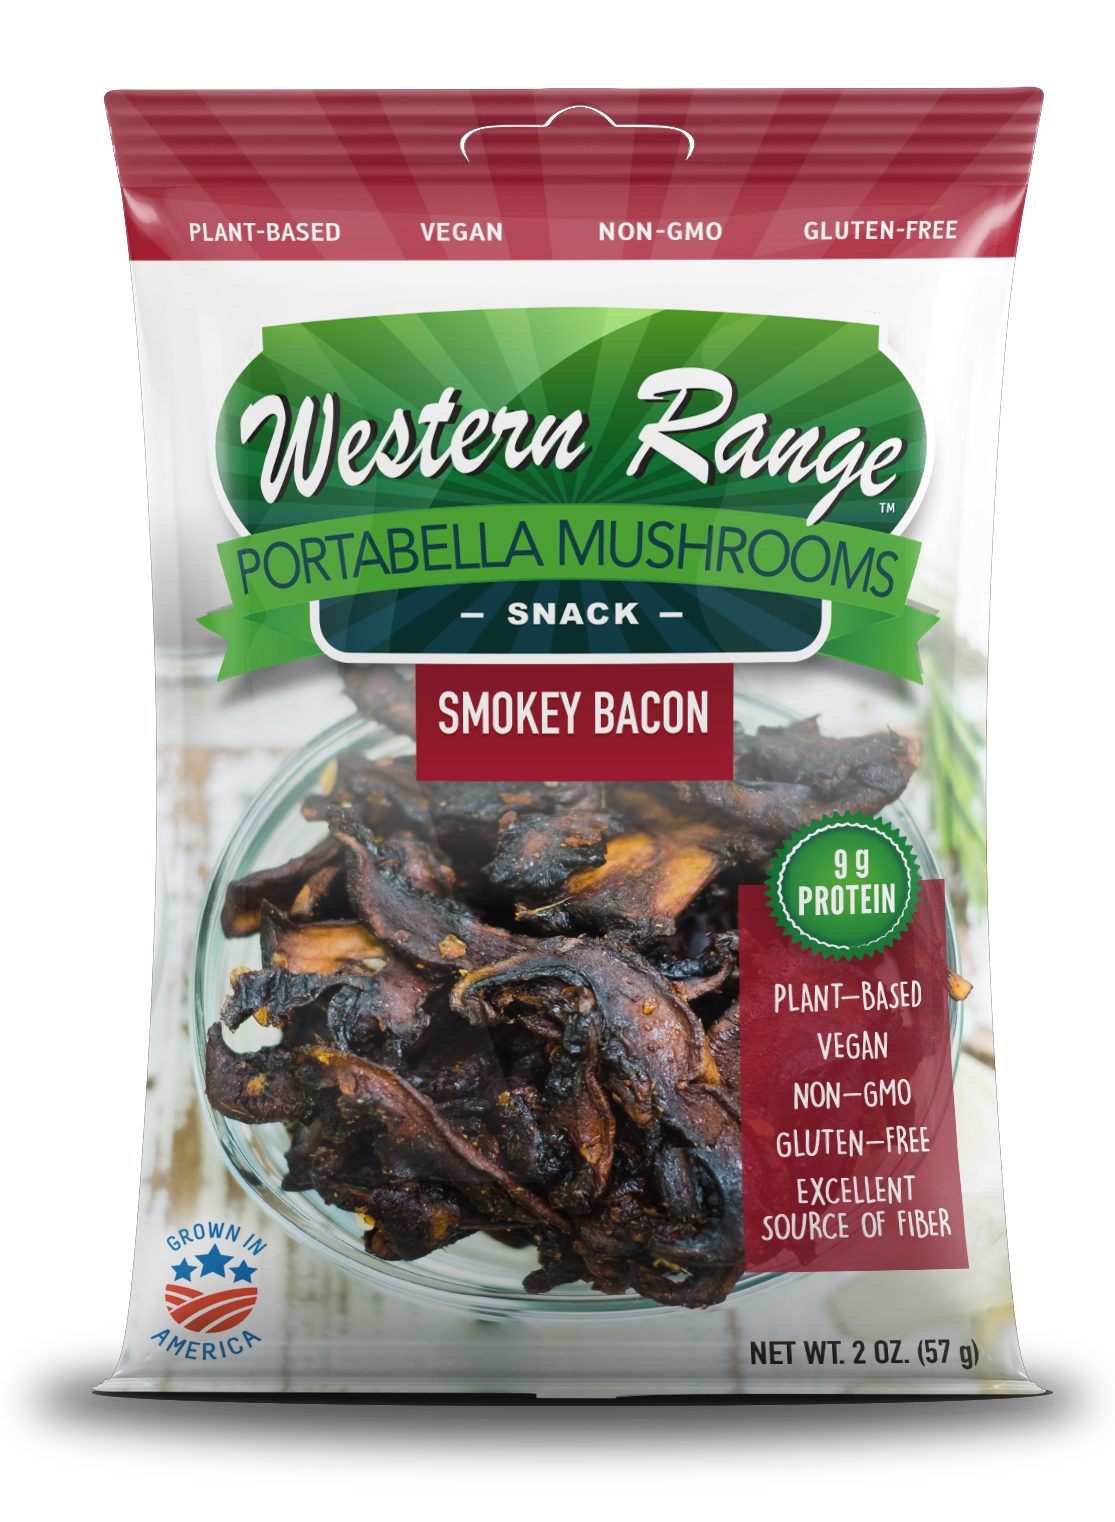 Western Range Portabella Mushrooms - Smokey Bacon